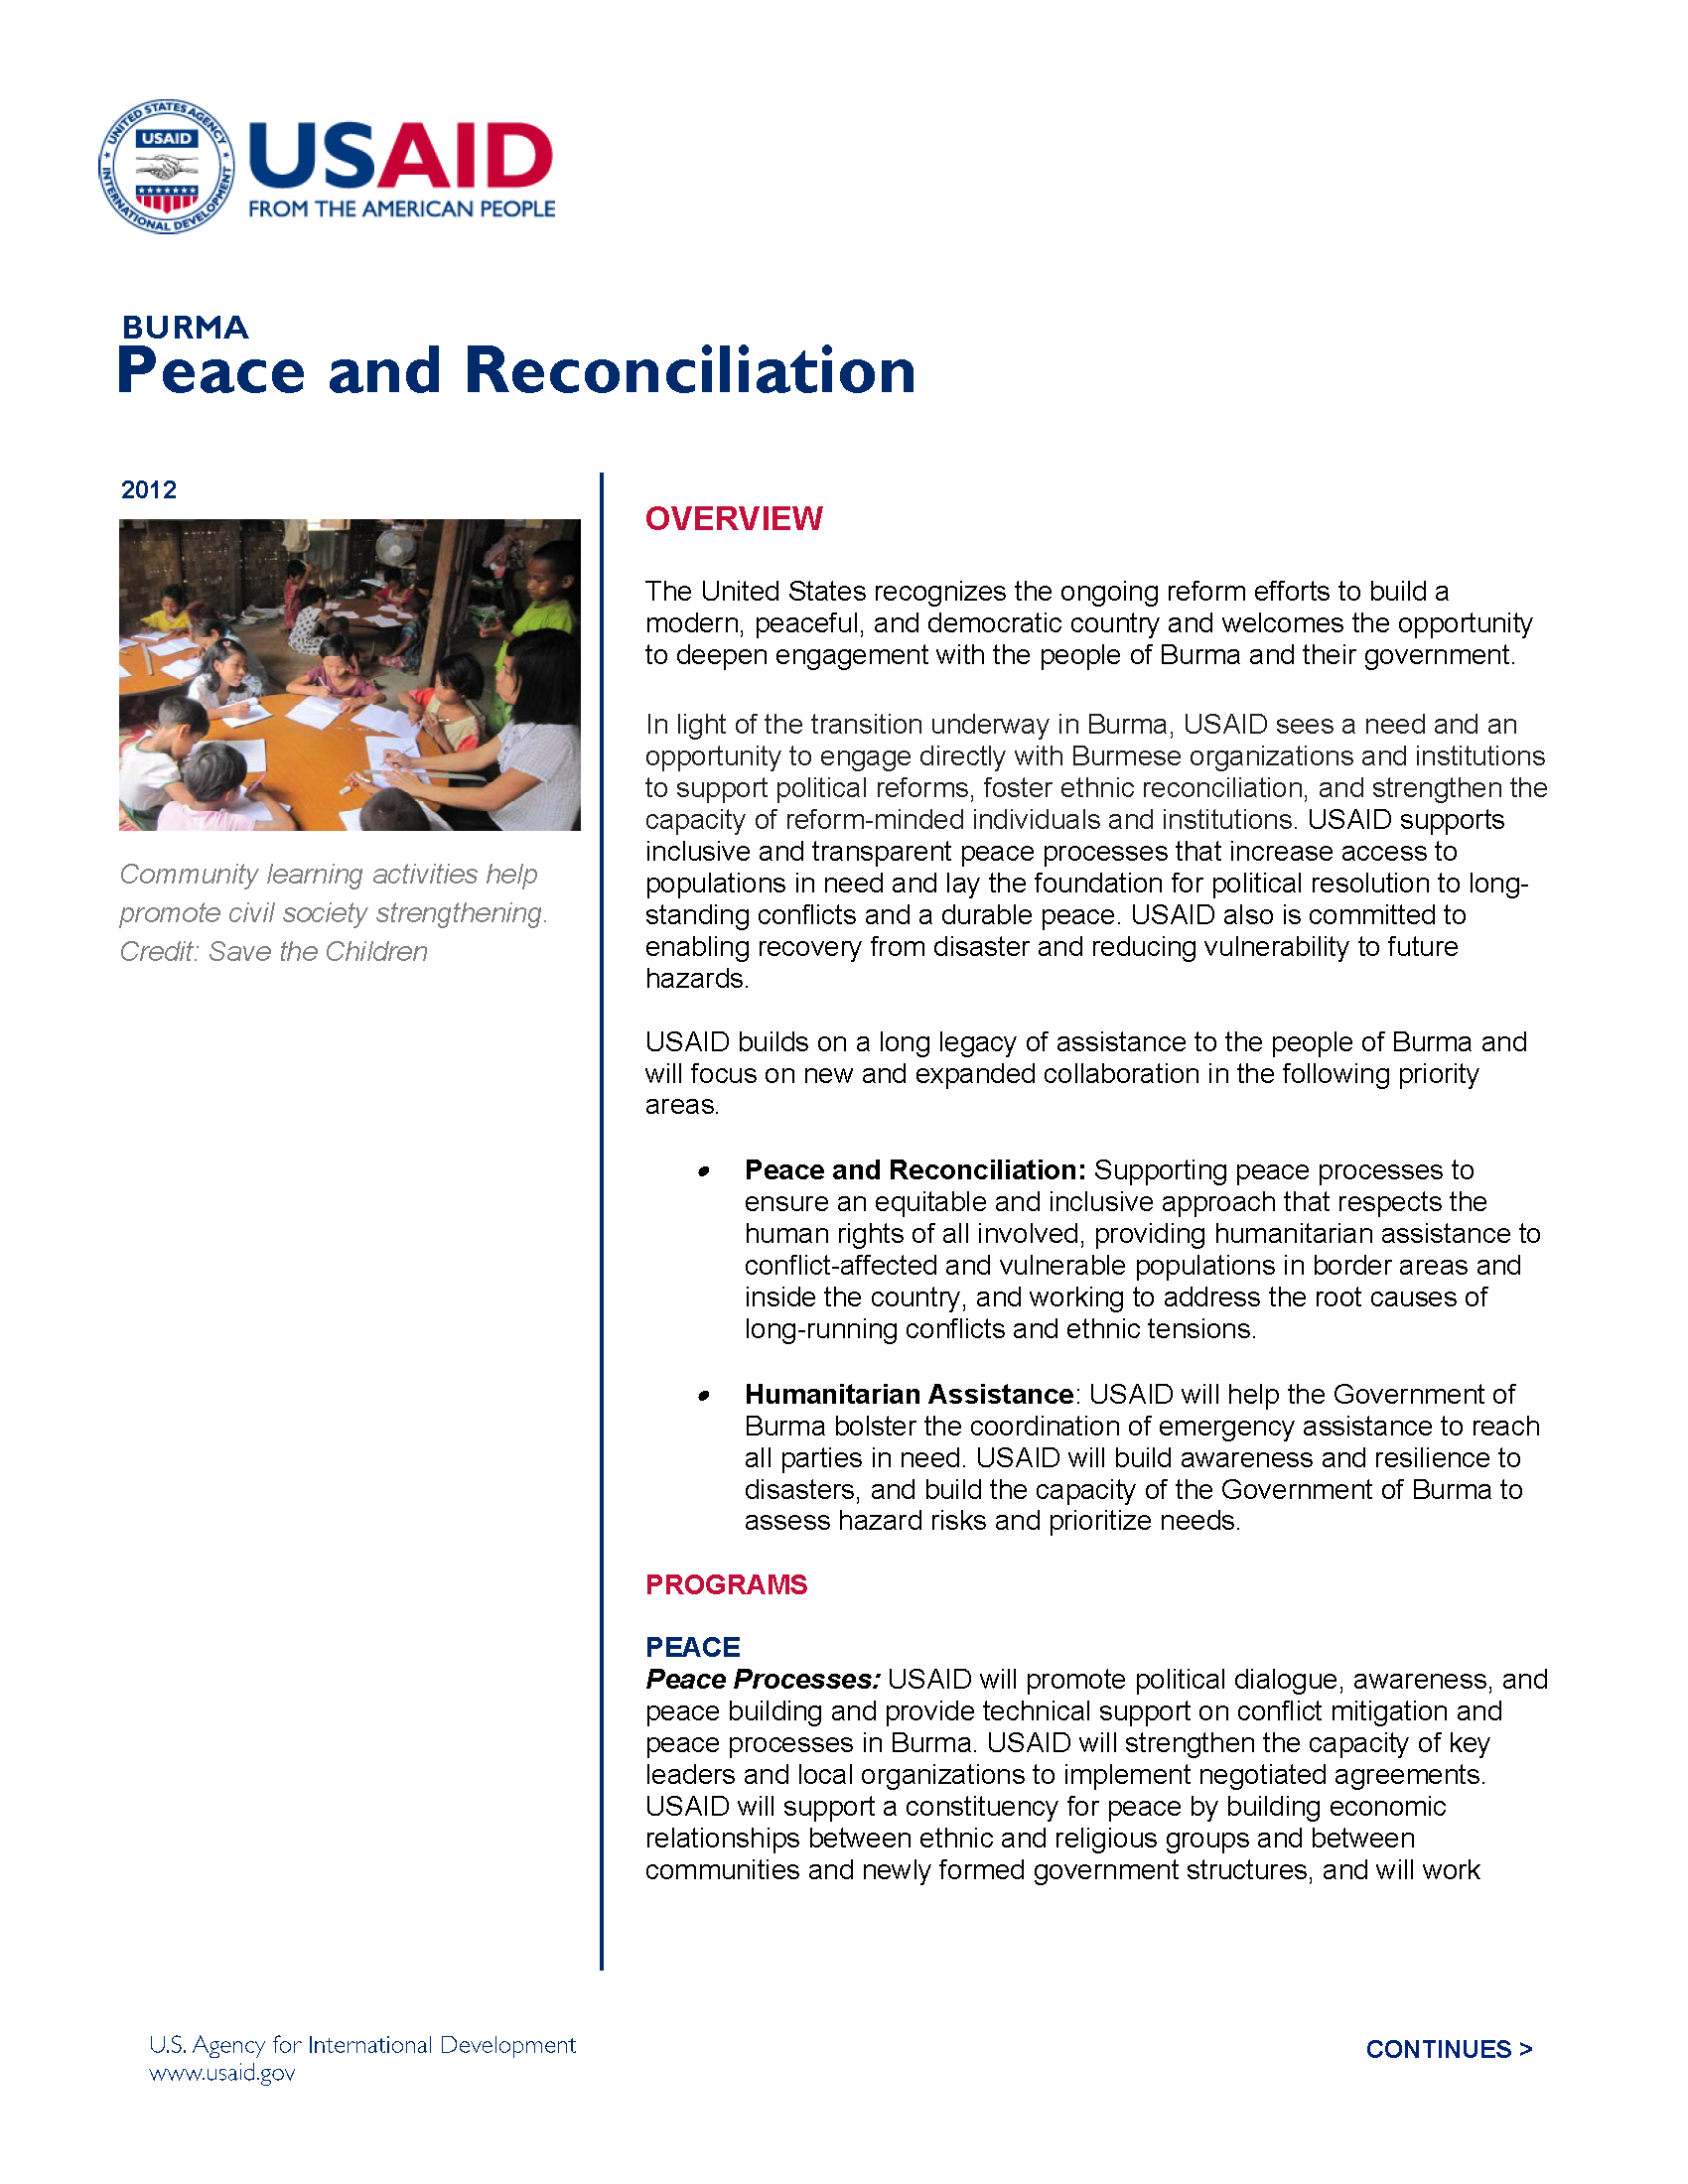 Burma Peace and Reconciliation Fact Sheet